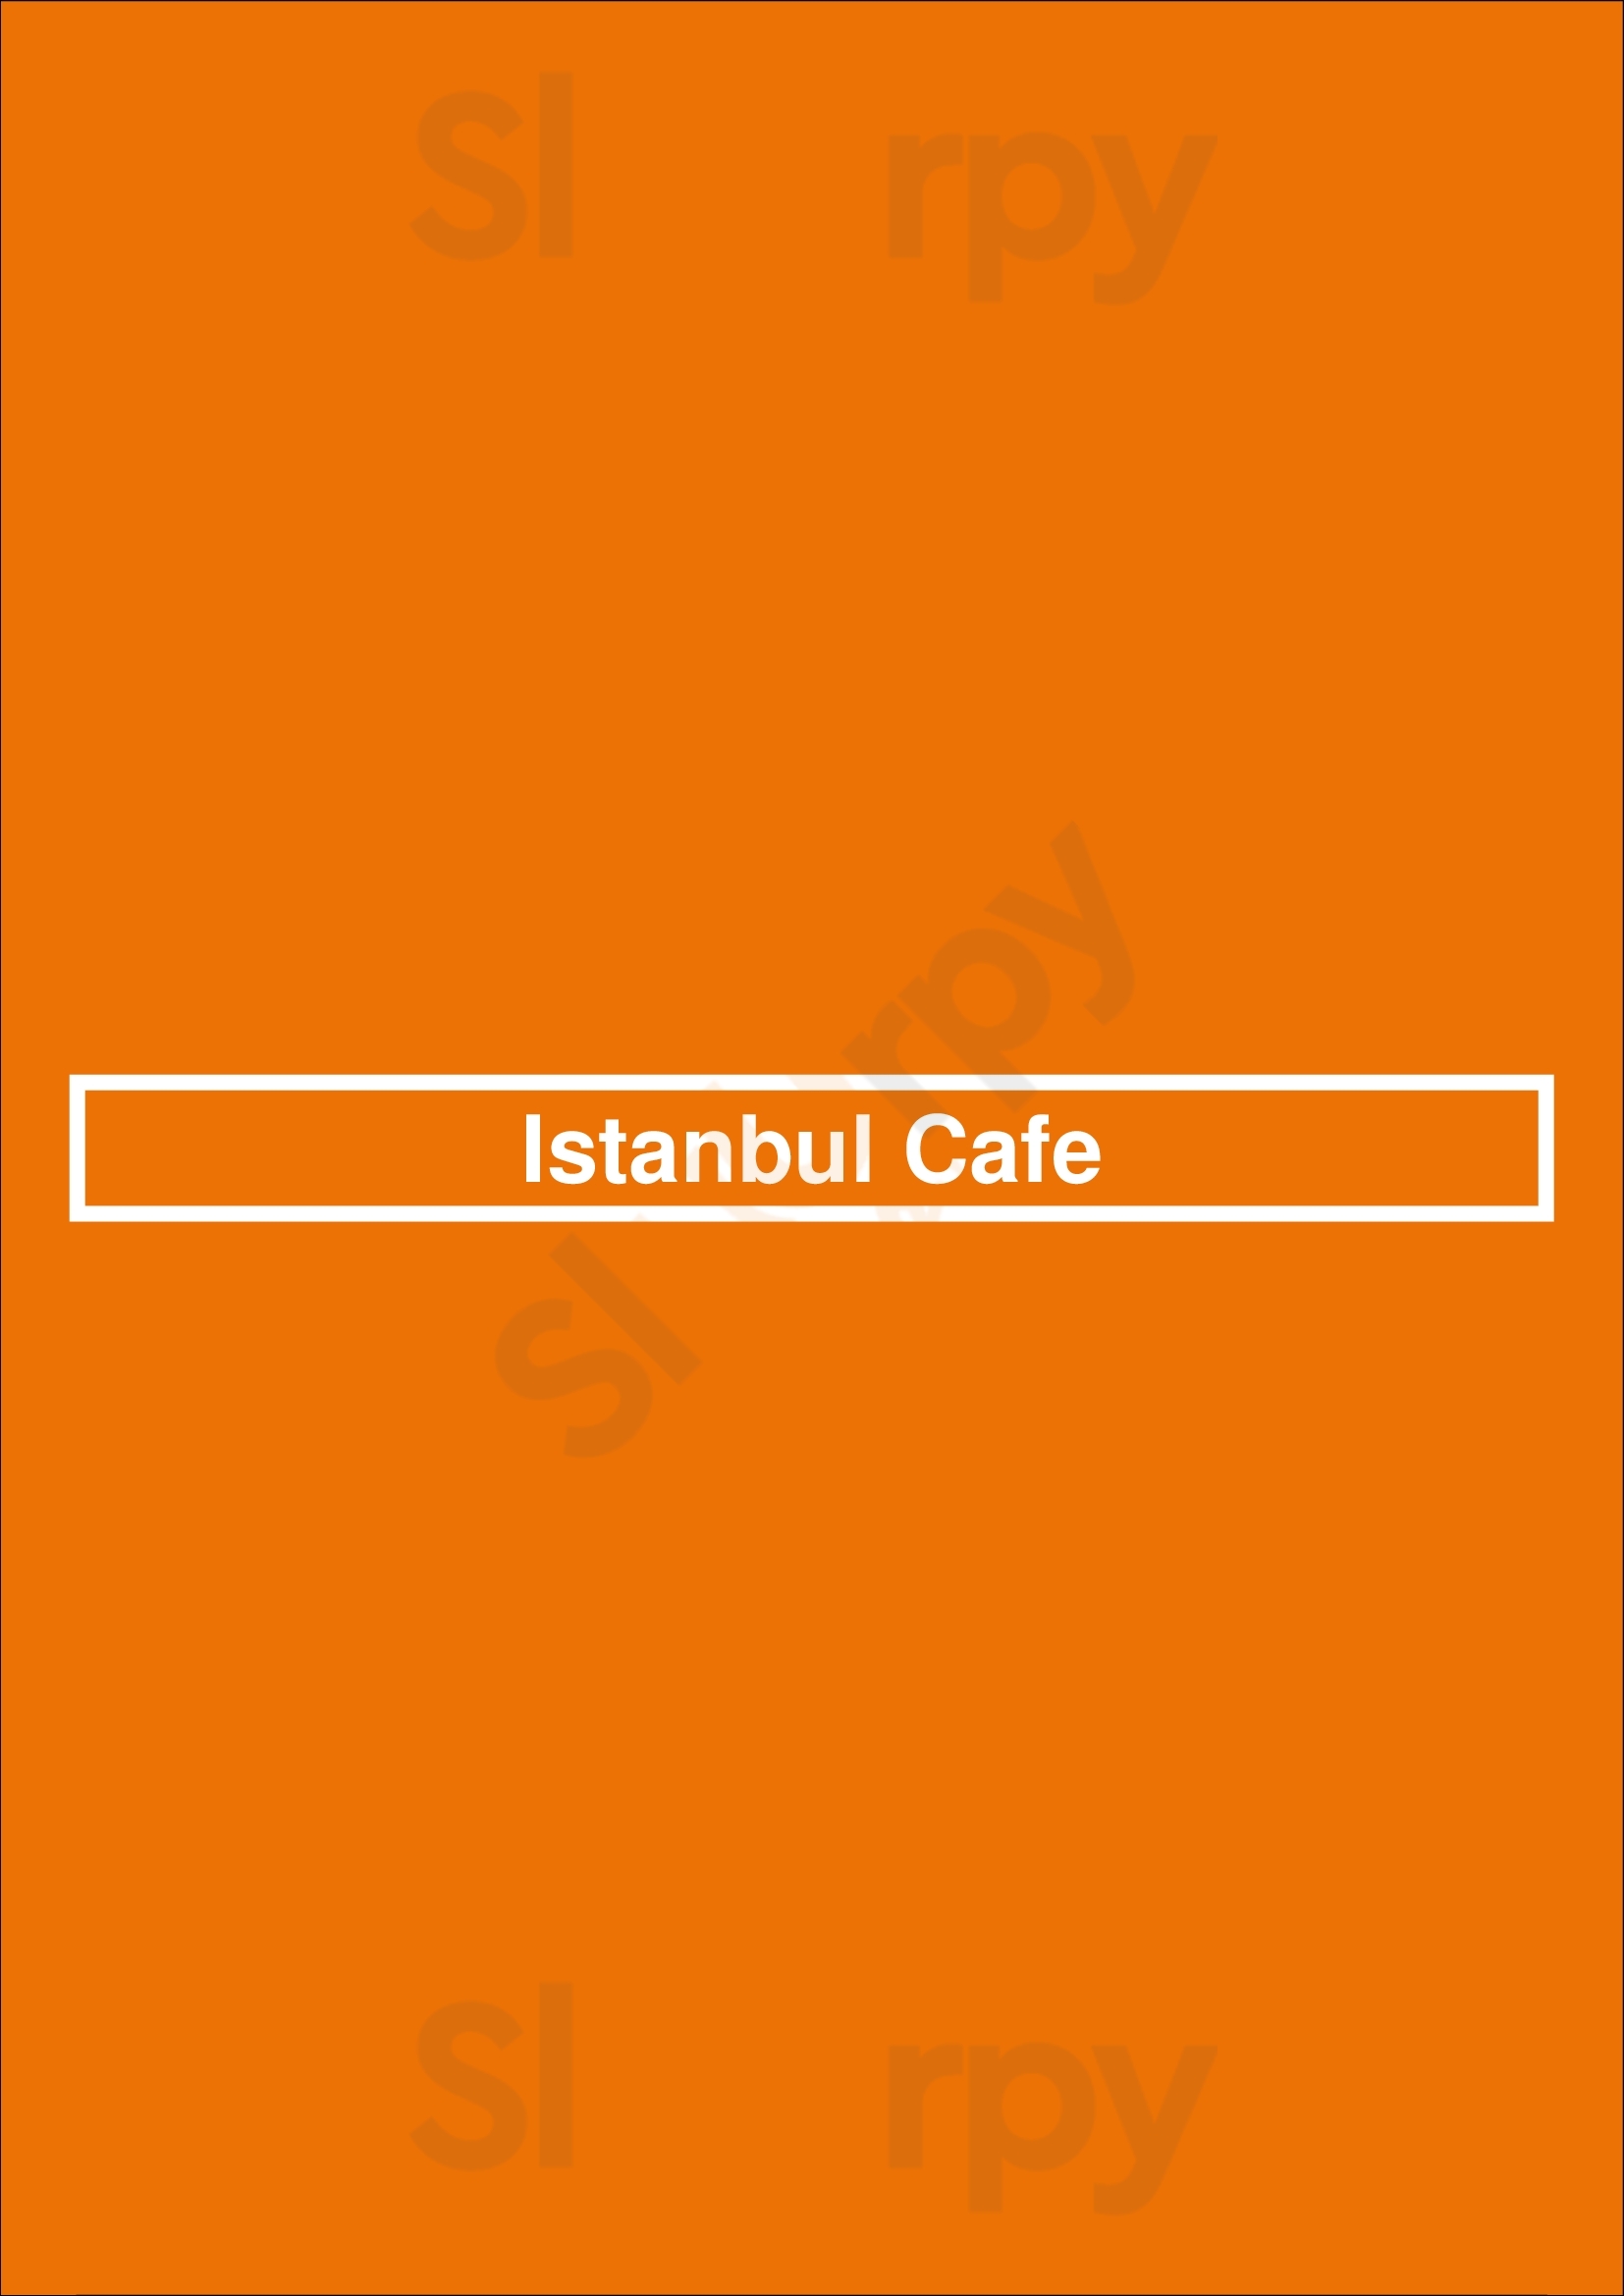 Cafe Istanbul Decatur Menu - 1